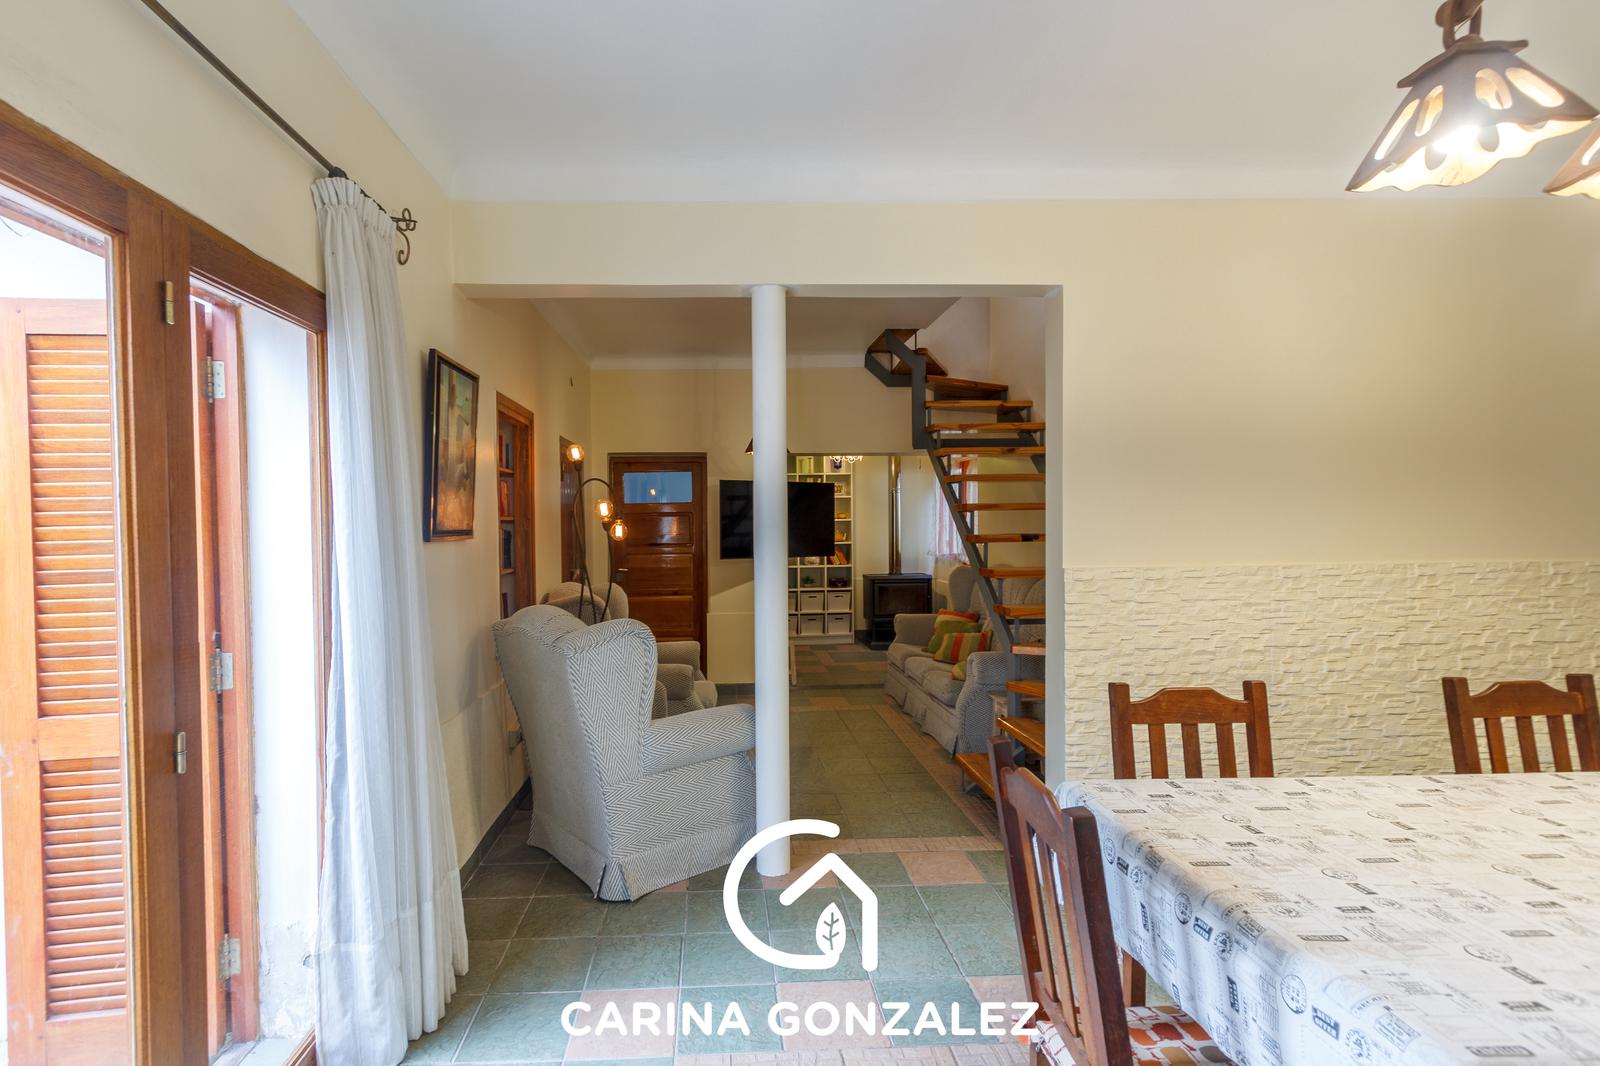 #4970488 | Venta | Casa | Neuquen (Carina Gonzalez - Servicios Inmobiliarios)